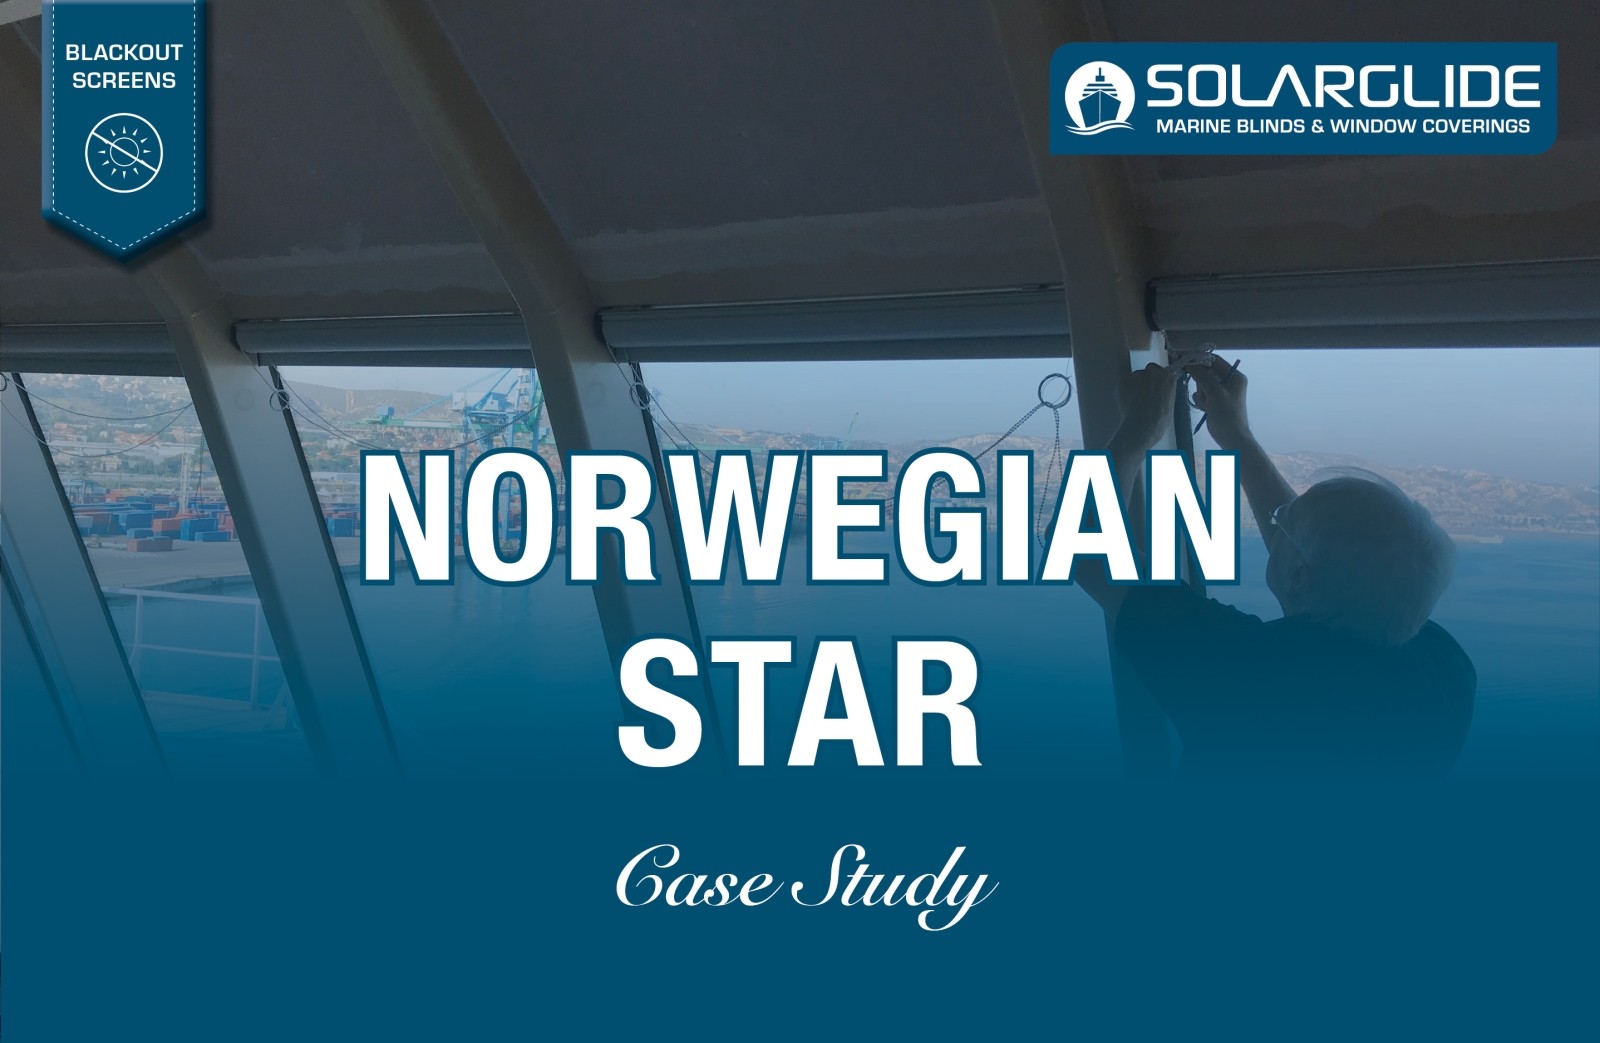 Solarglide Norwegian Star Case Study